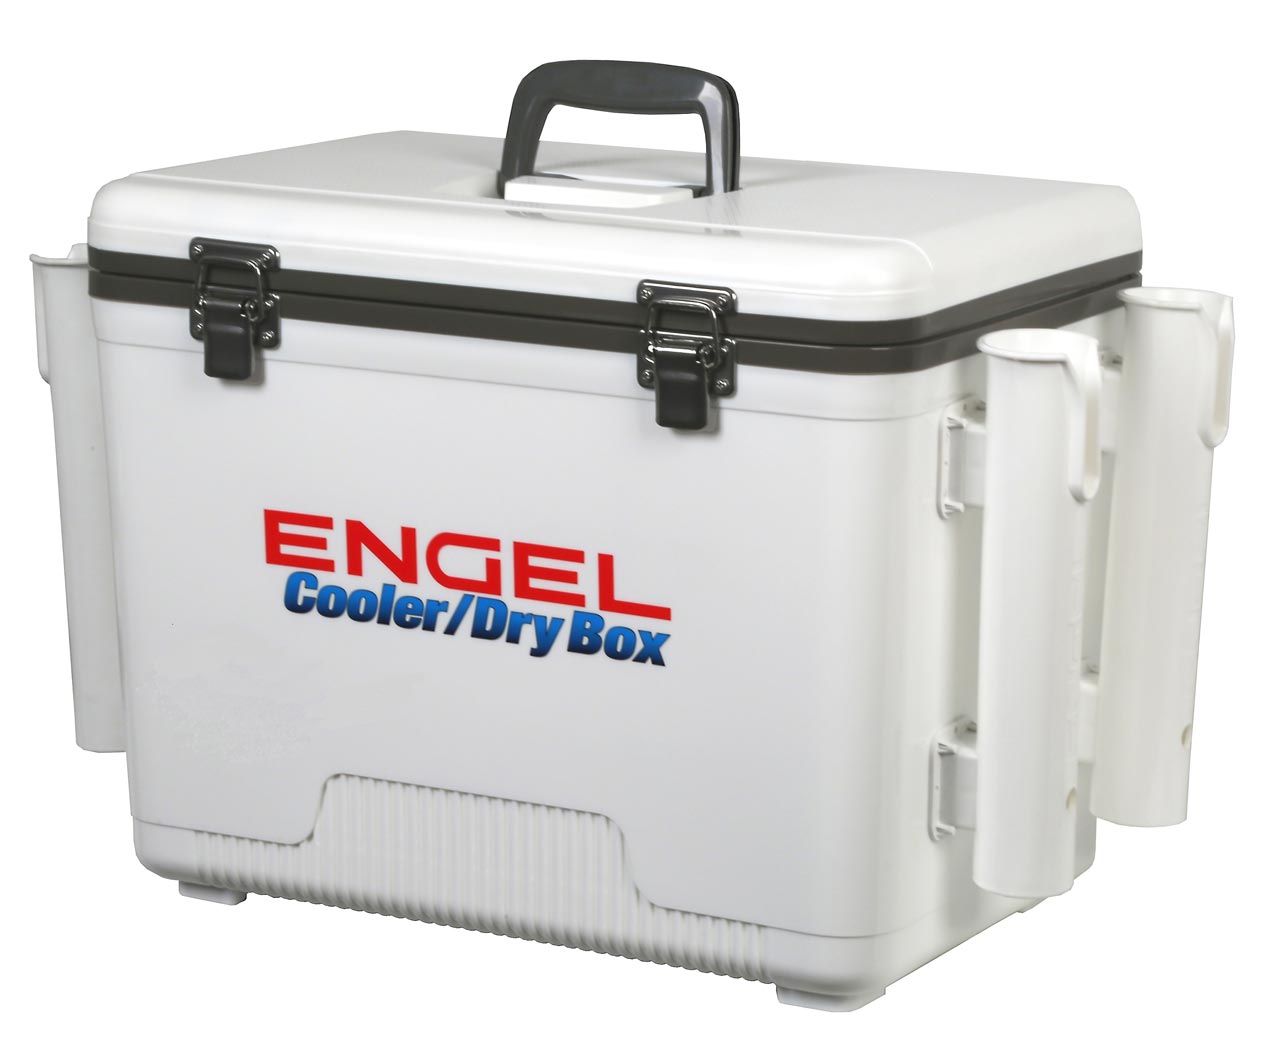 Engel 19-Quart Cooler/Dry Box with Rod Holders - White